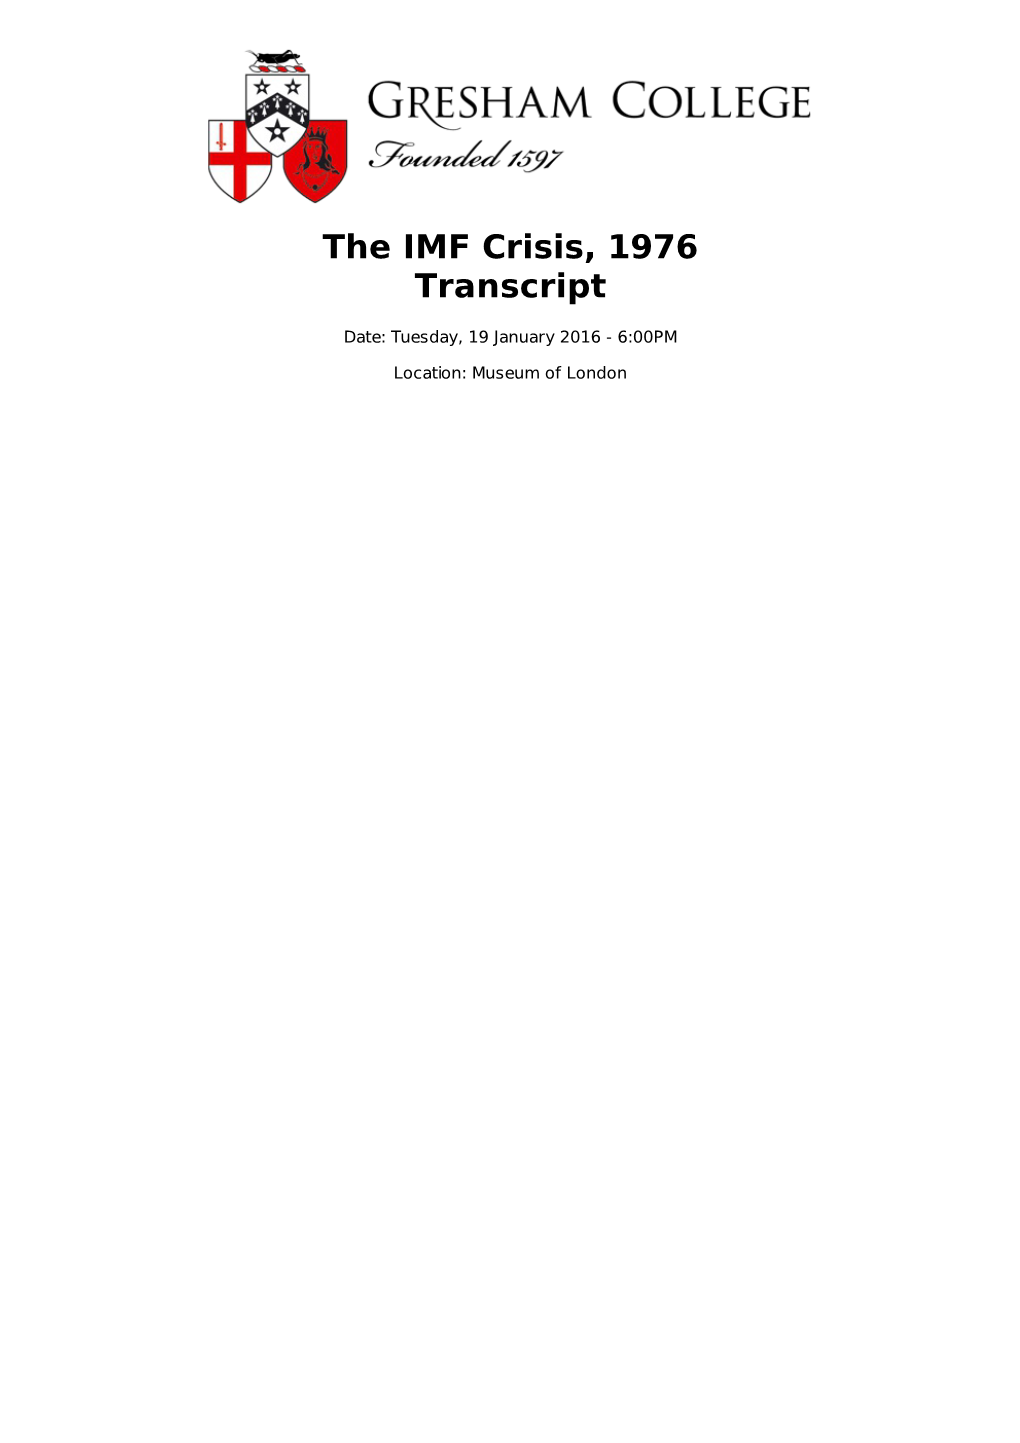 The IMF Crisis, 1976 Transcript